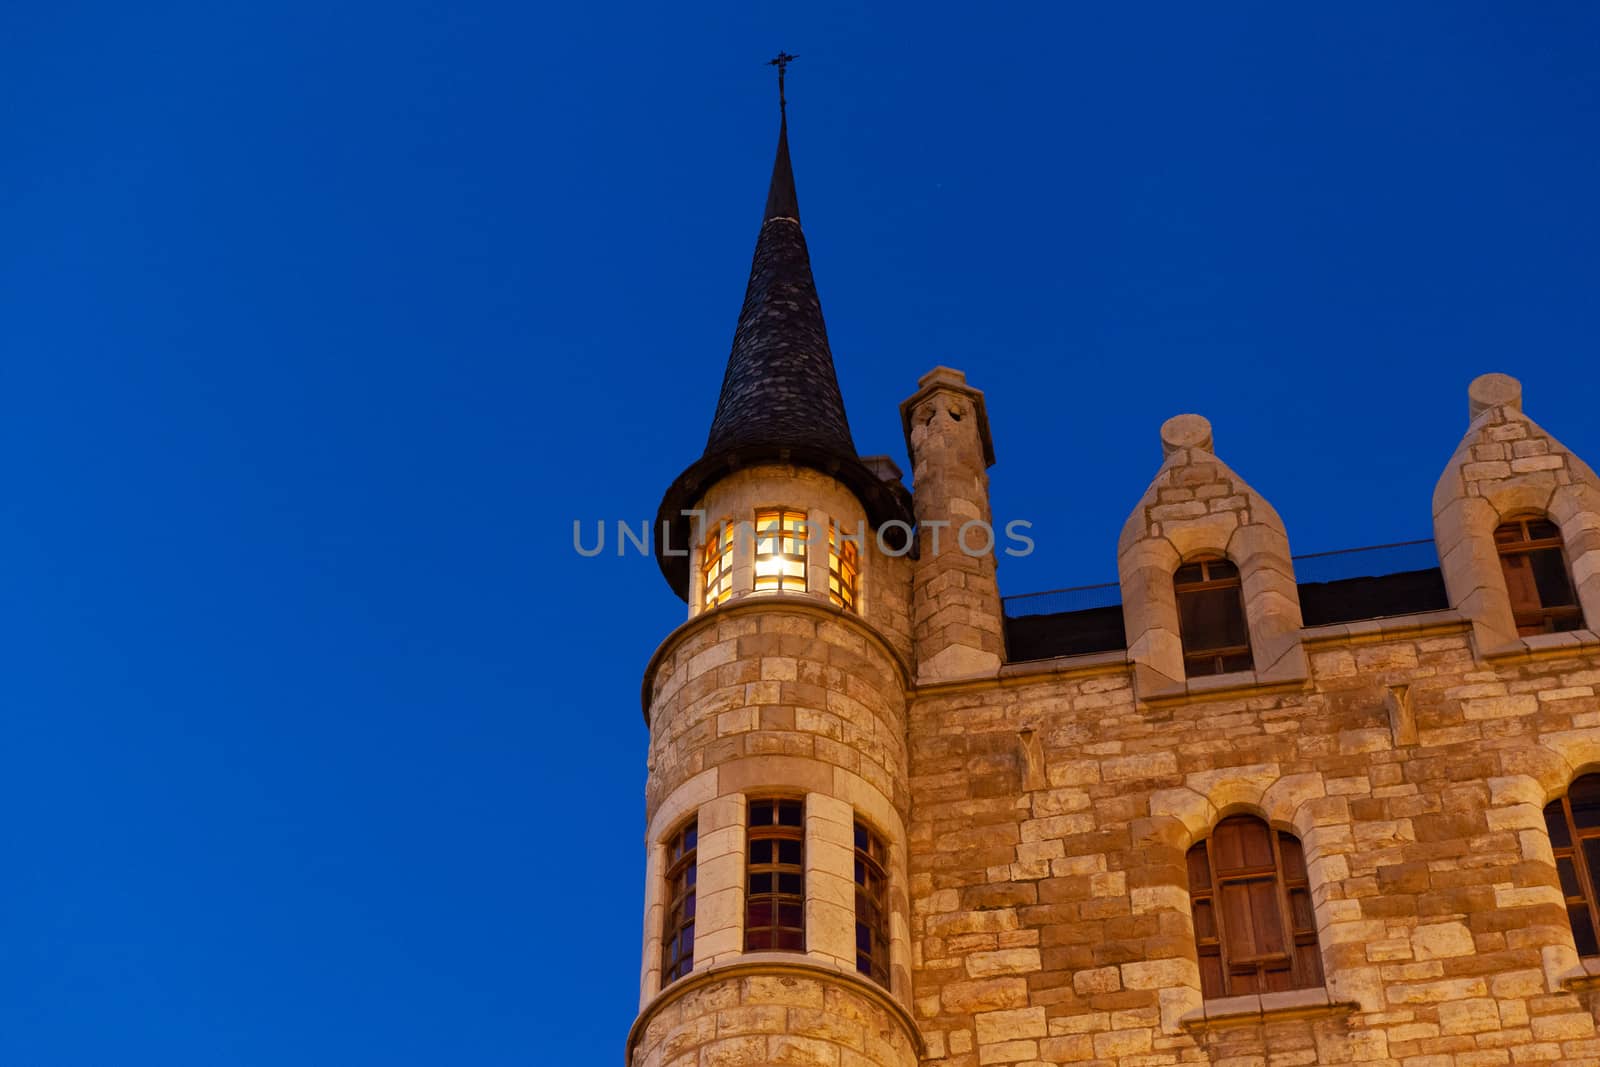 Tower of Casa Botines, Leon, Spain by vlad-m